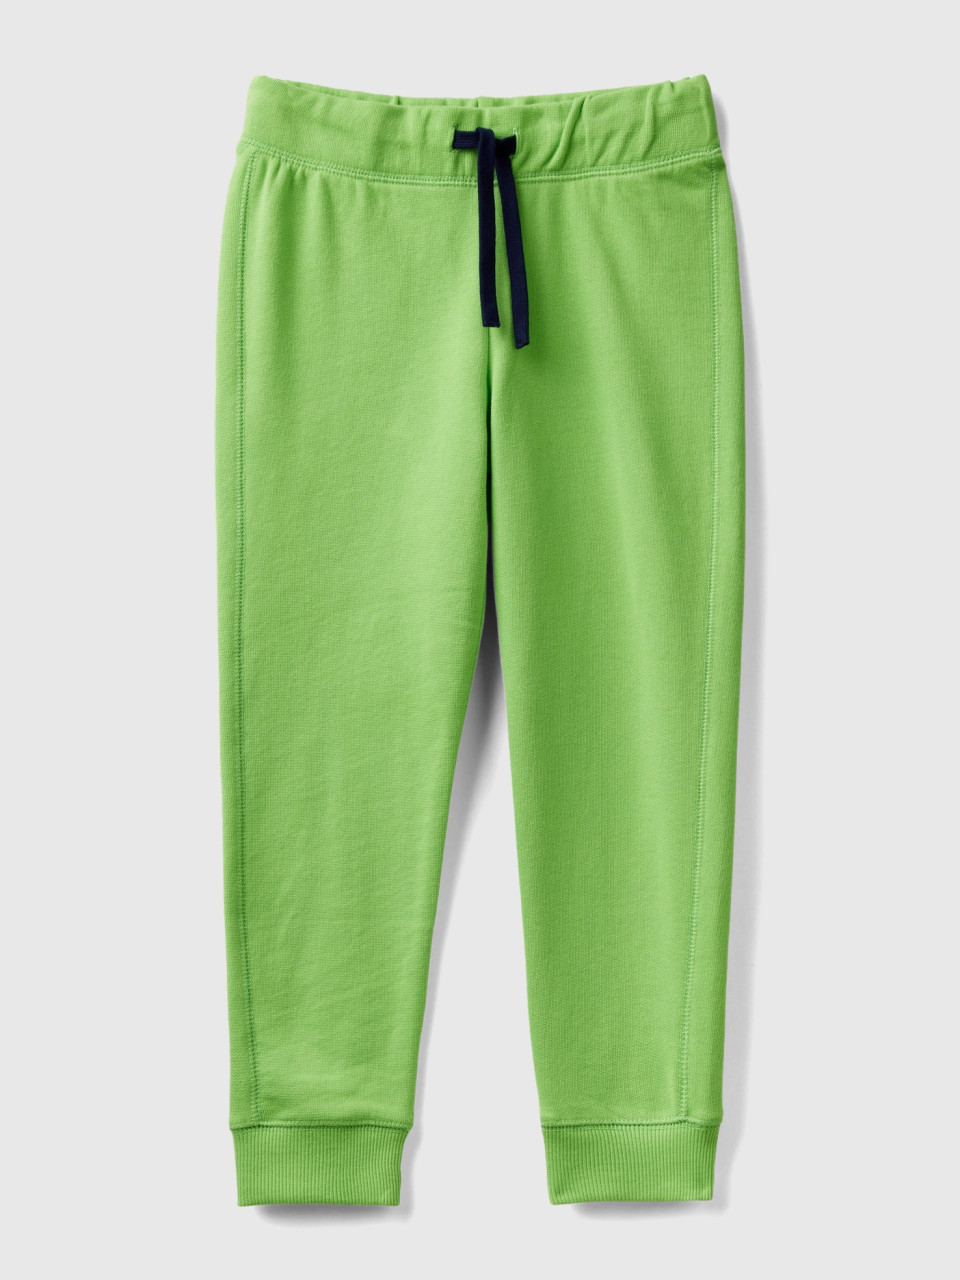 Benetton, 100% Cotton Sweatpants, Light Green, Kids